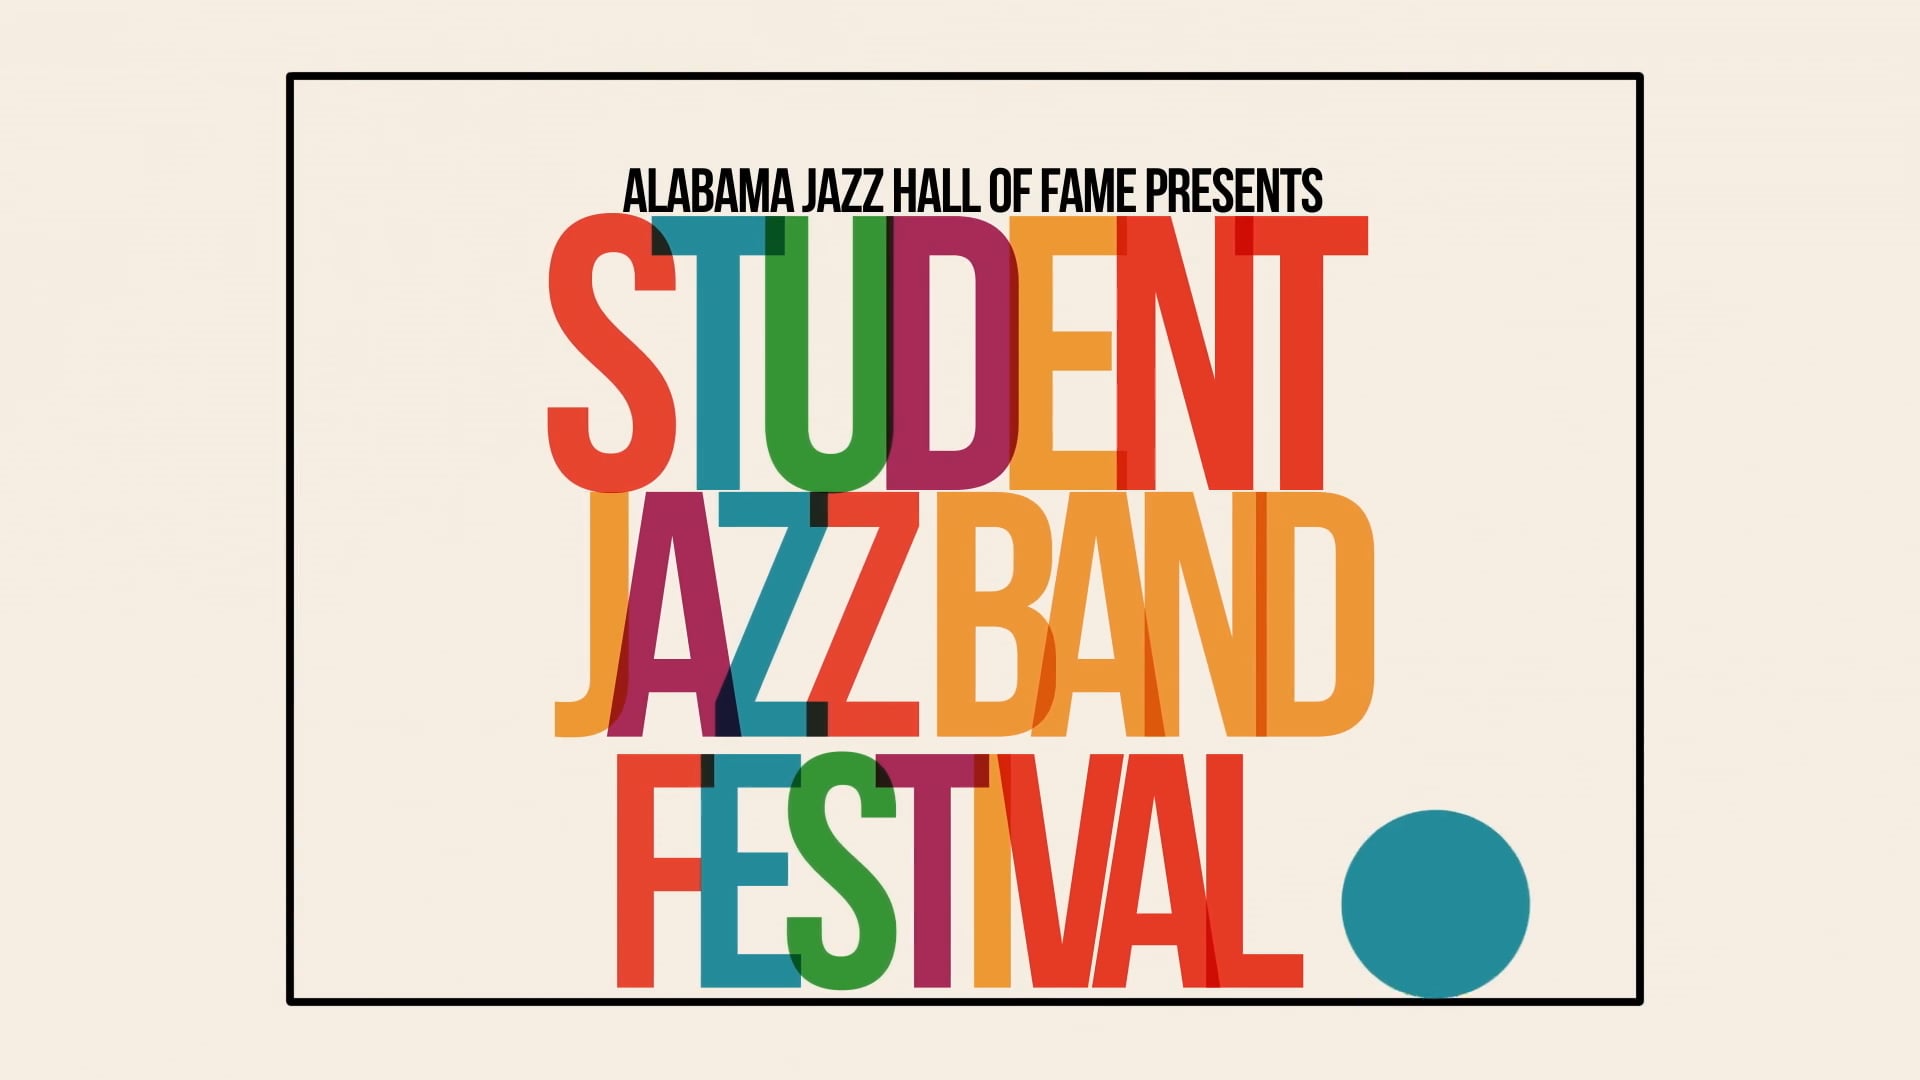 Alabama Jazz Hall of Fame presents Student Jazz Band Festival on Vimeo